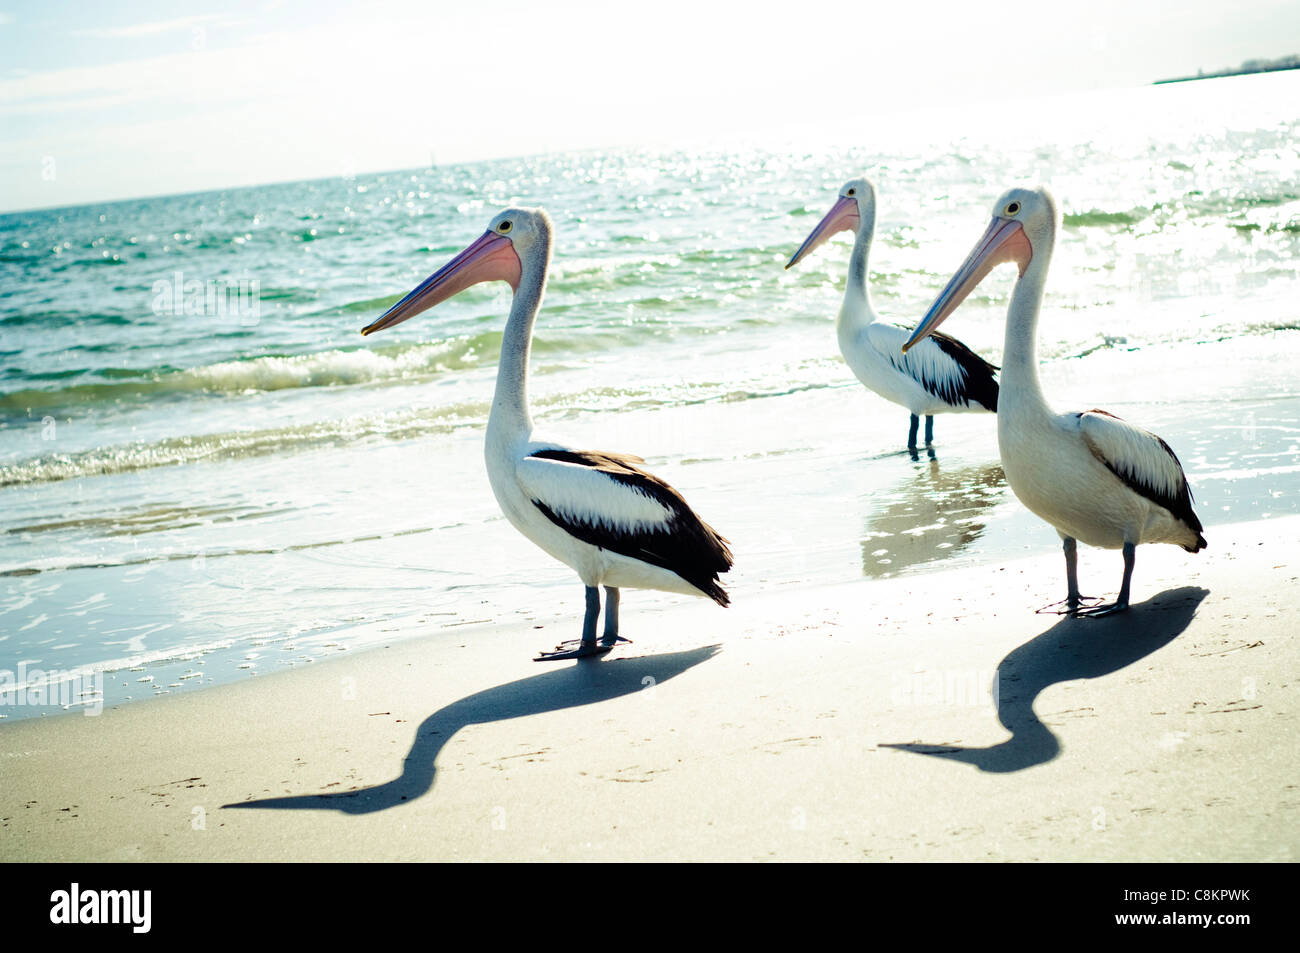 Three pelicans on a beach Stock Photo